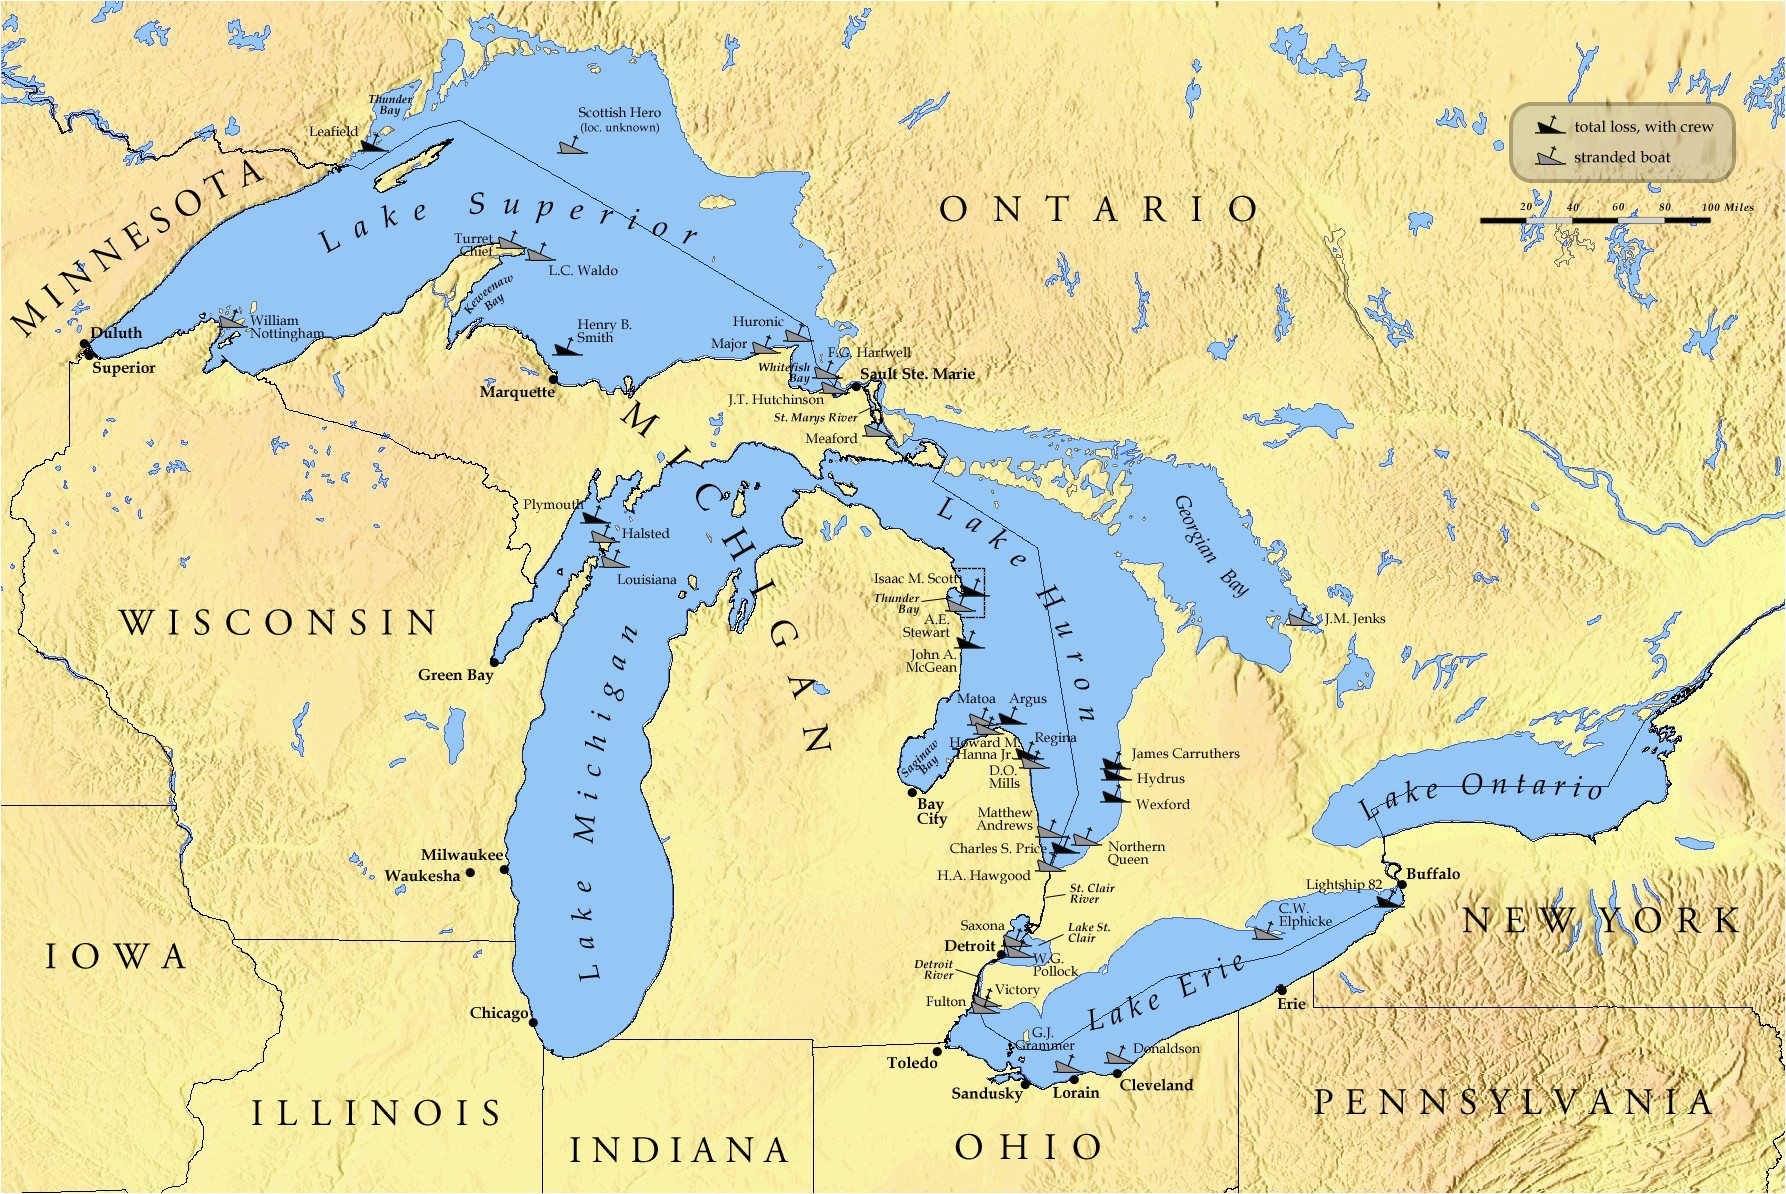 Map Of Lake Michigan Shipwrecks List Of Shipwrecks In the Great Lakes Wikipedia